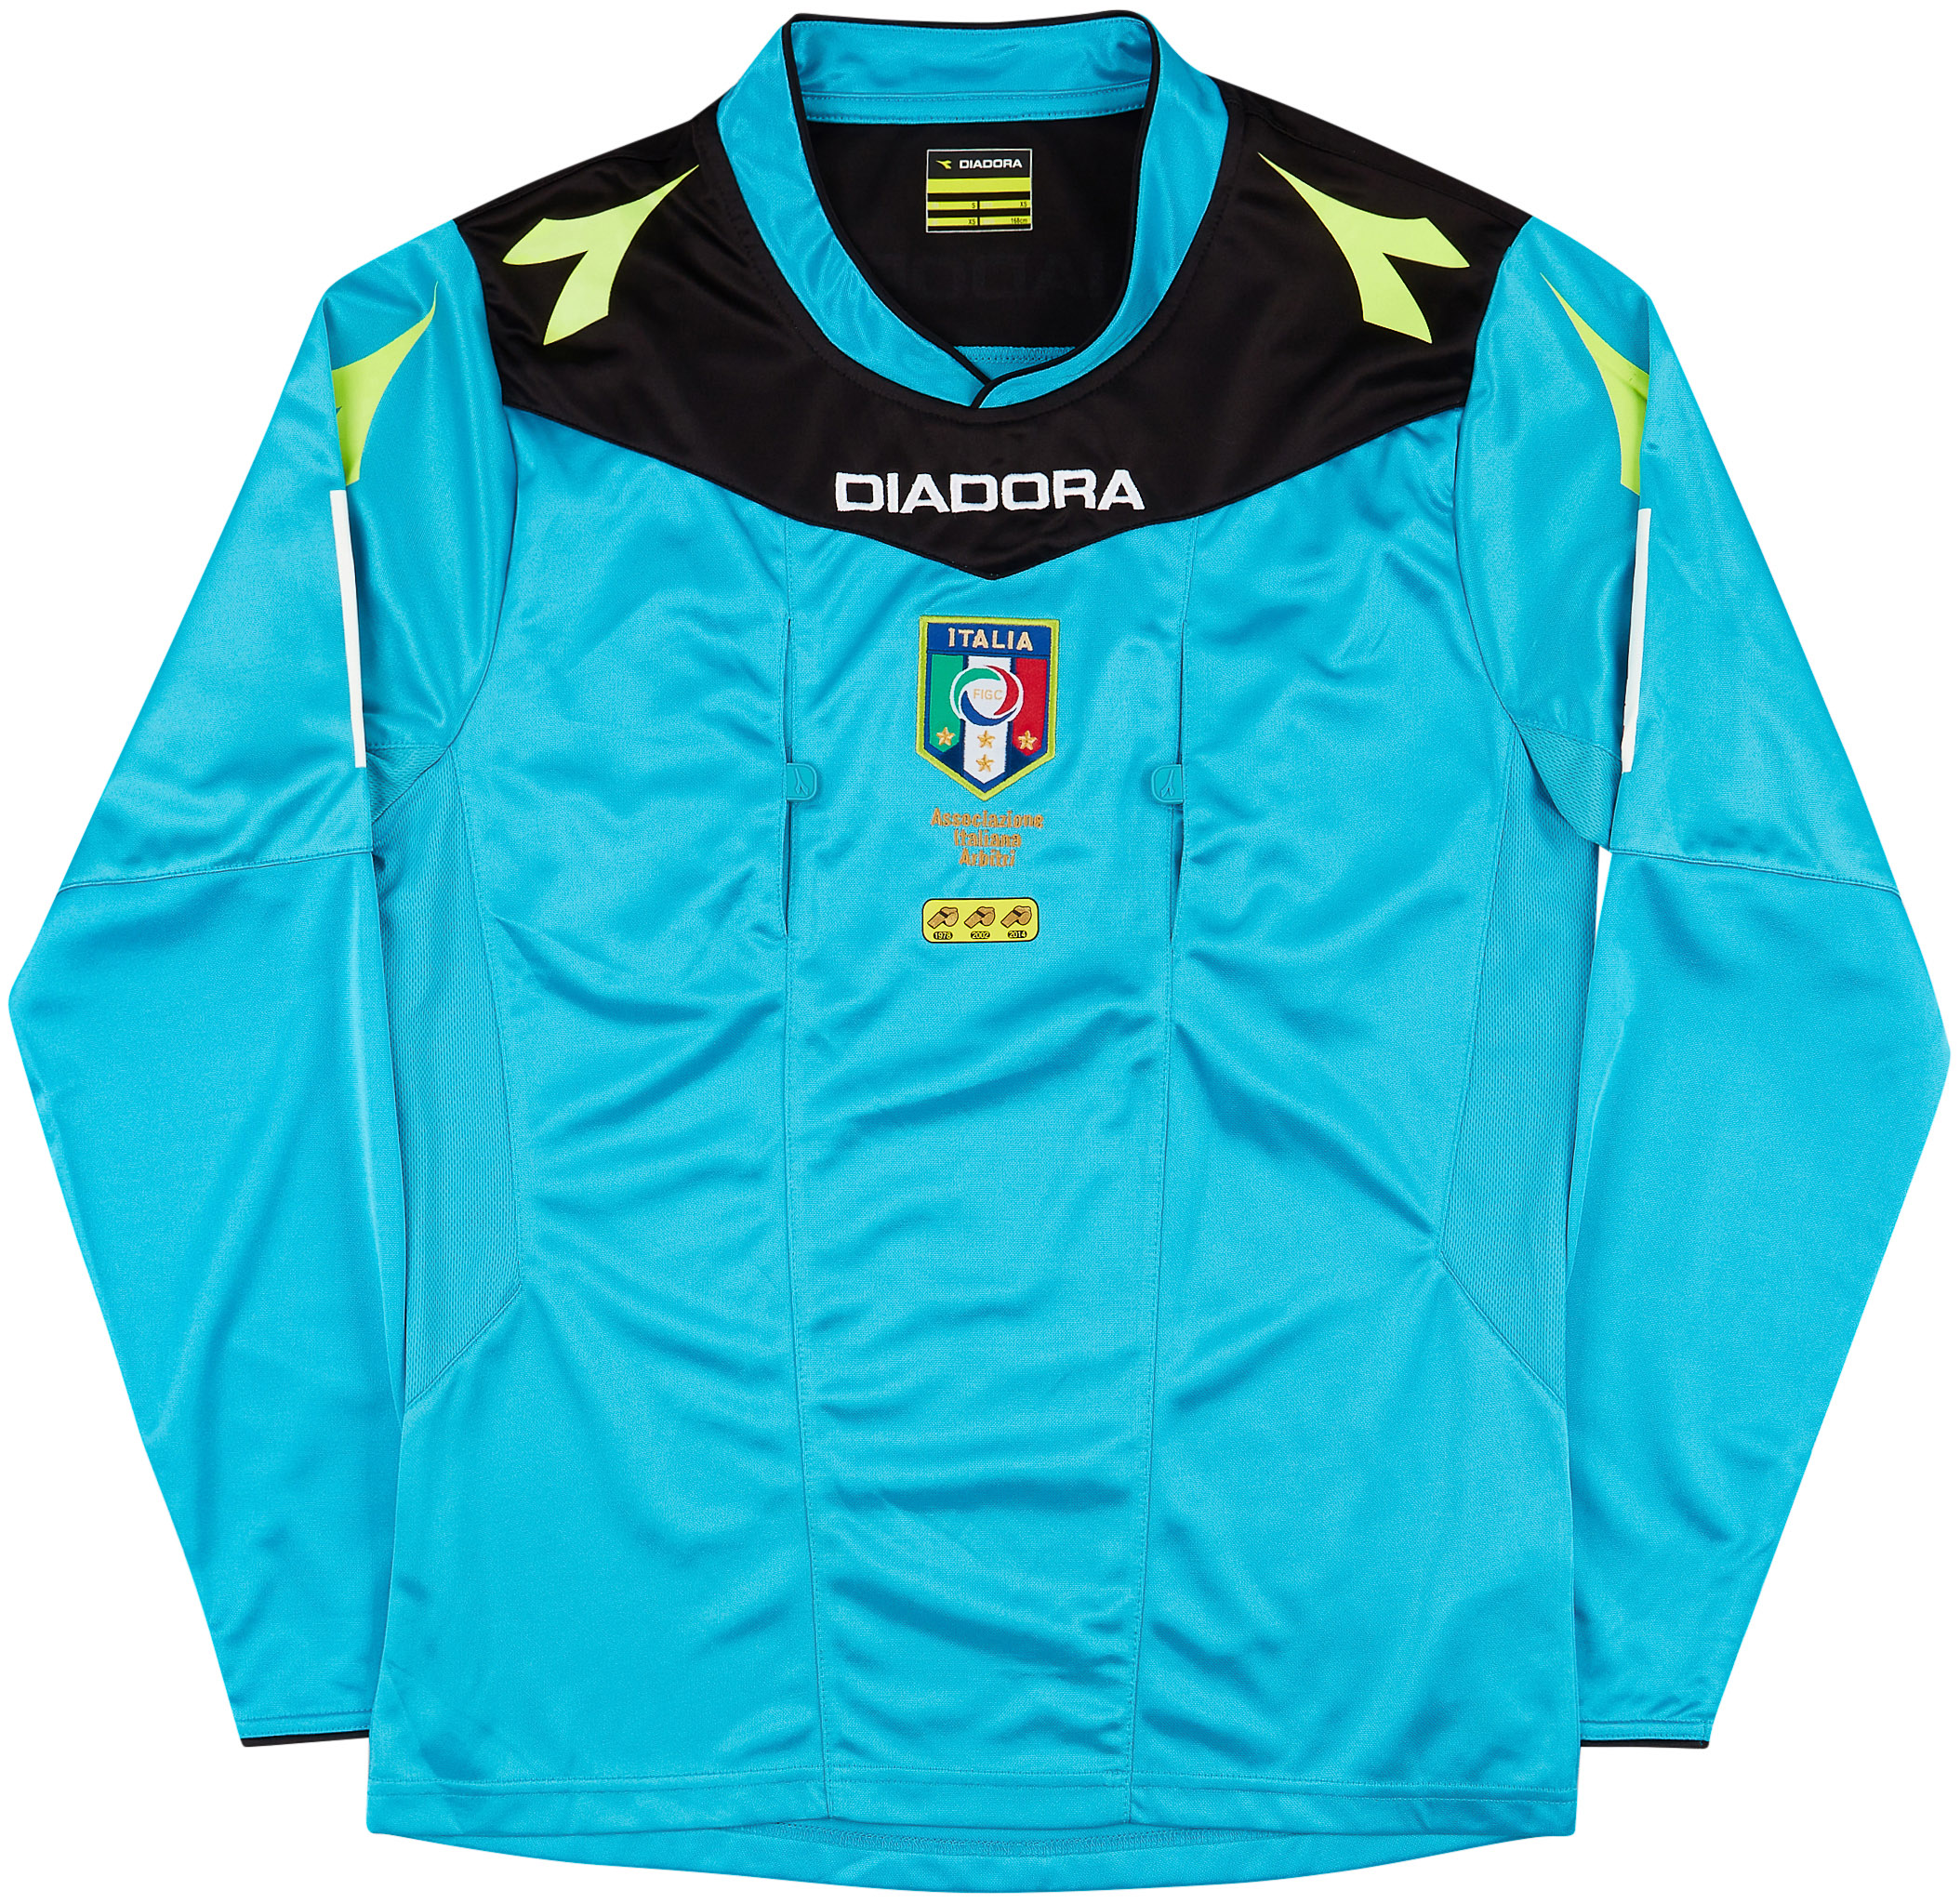 2015-16 Italy Diadora Referee Shirt - 7/10 - ()